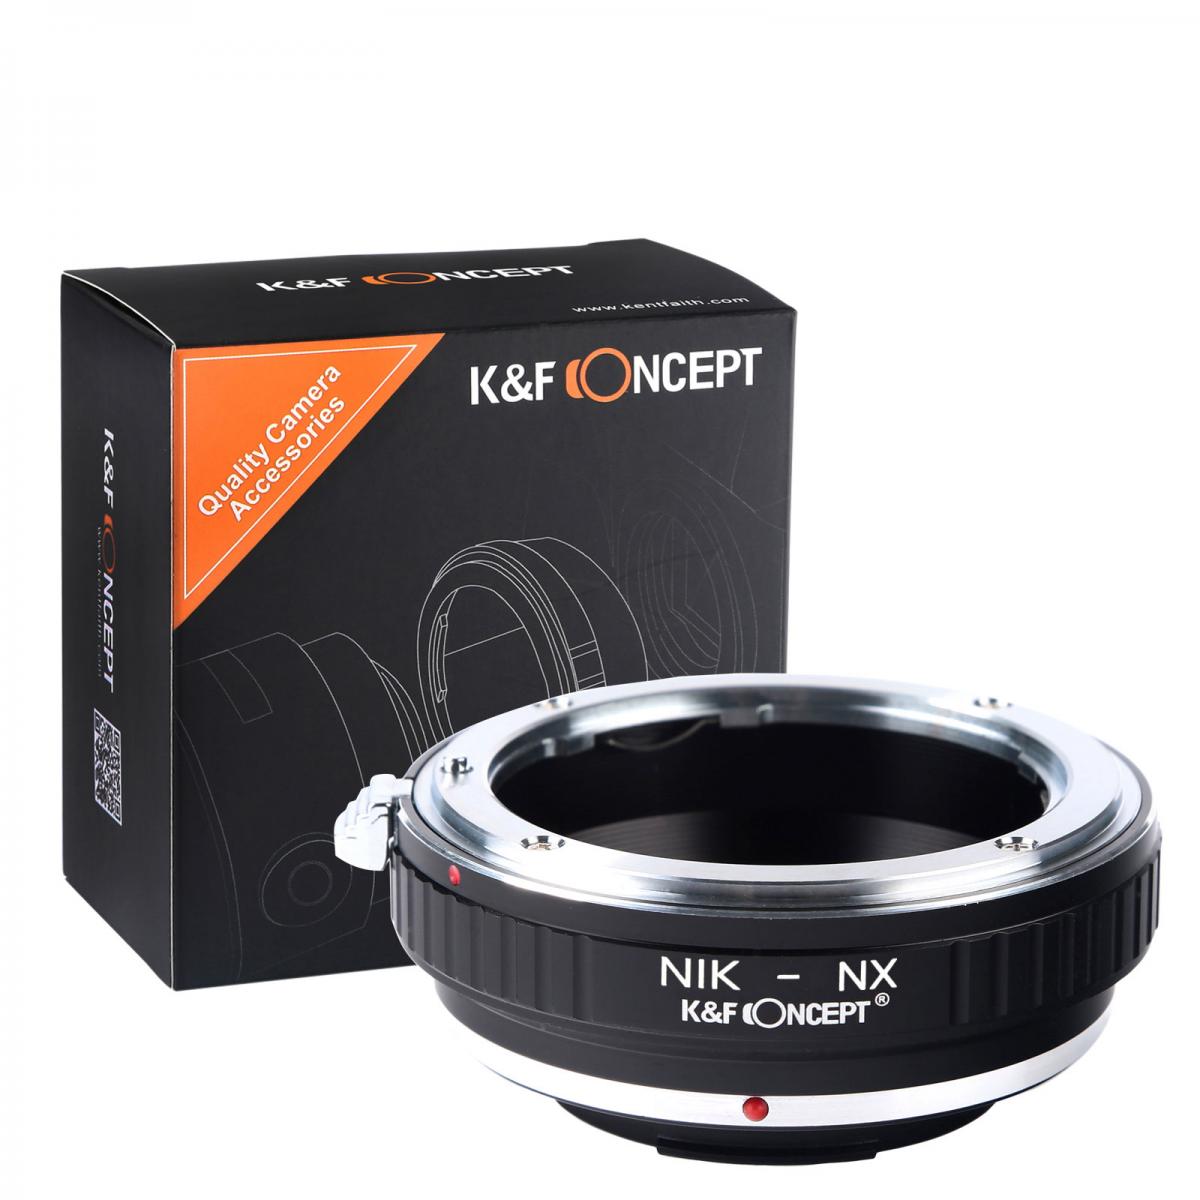 K&F Concept Nikon F Lenses to Samsung NX Lens Mount Adapter K&F Concept M11251 Lens Adapter